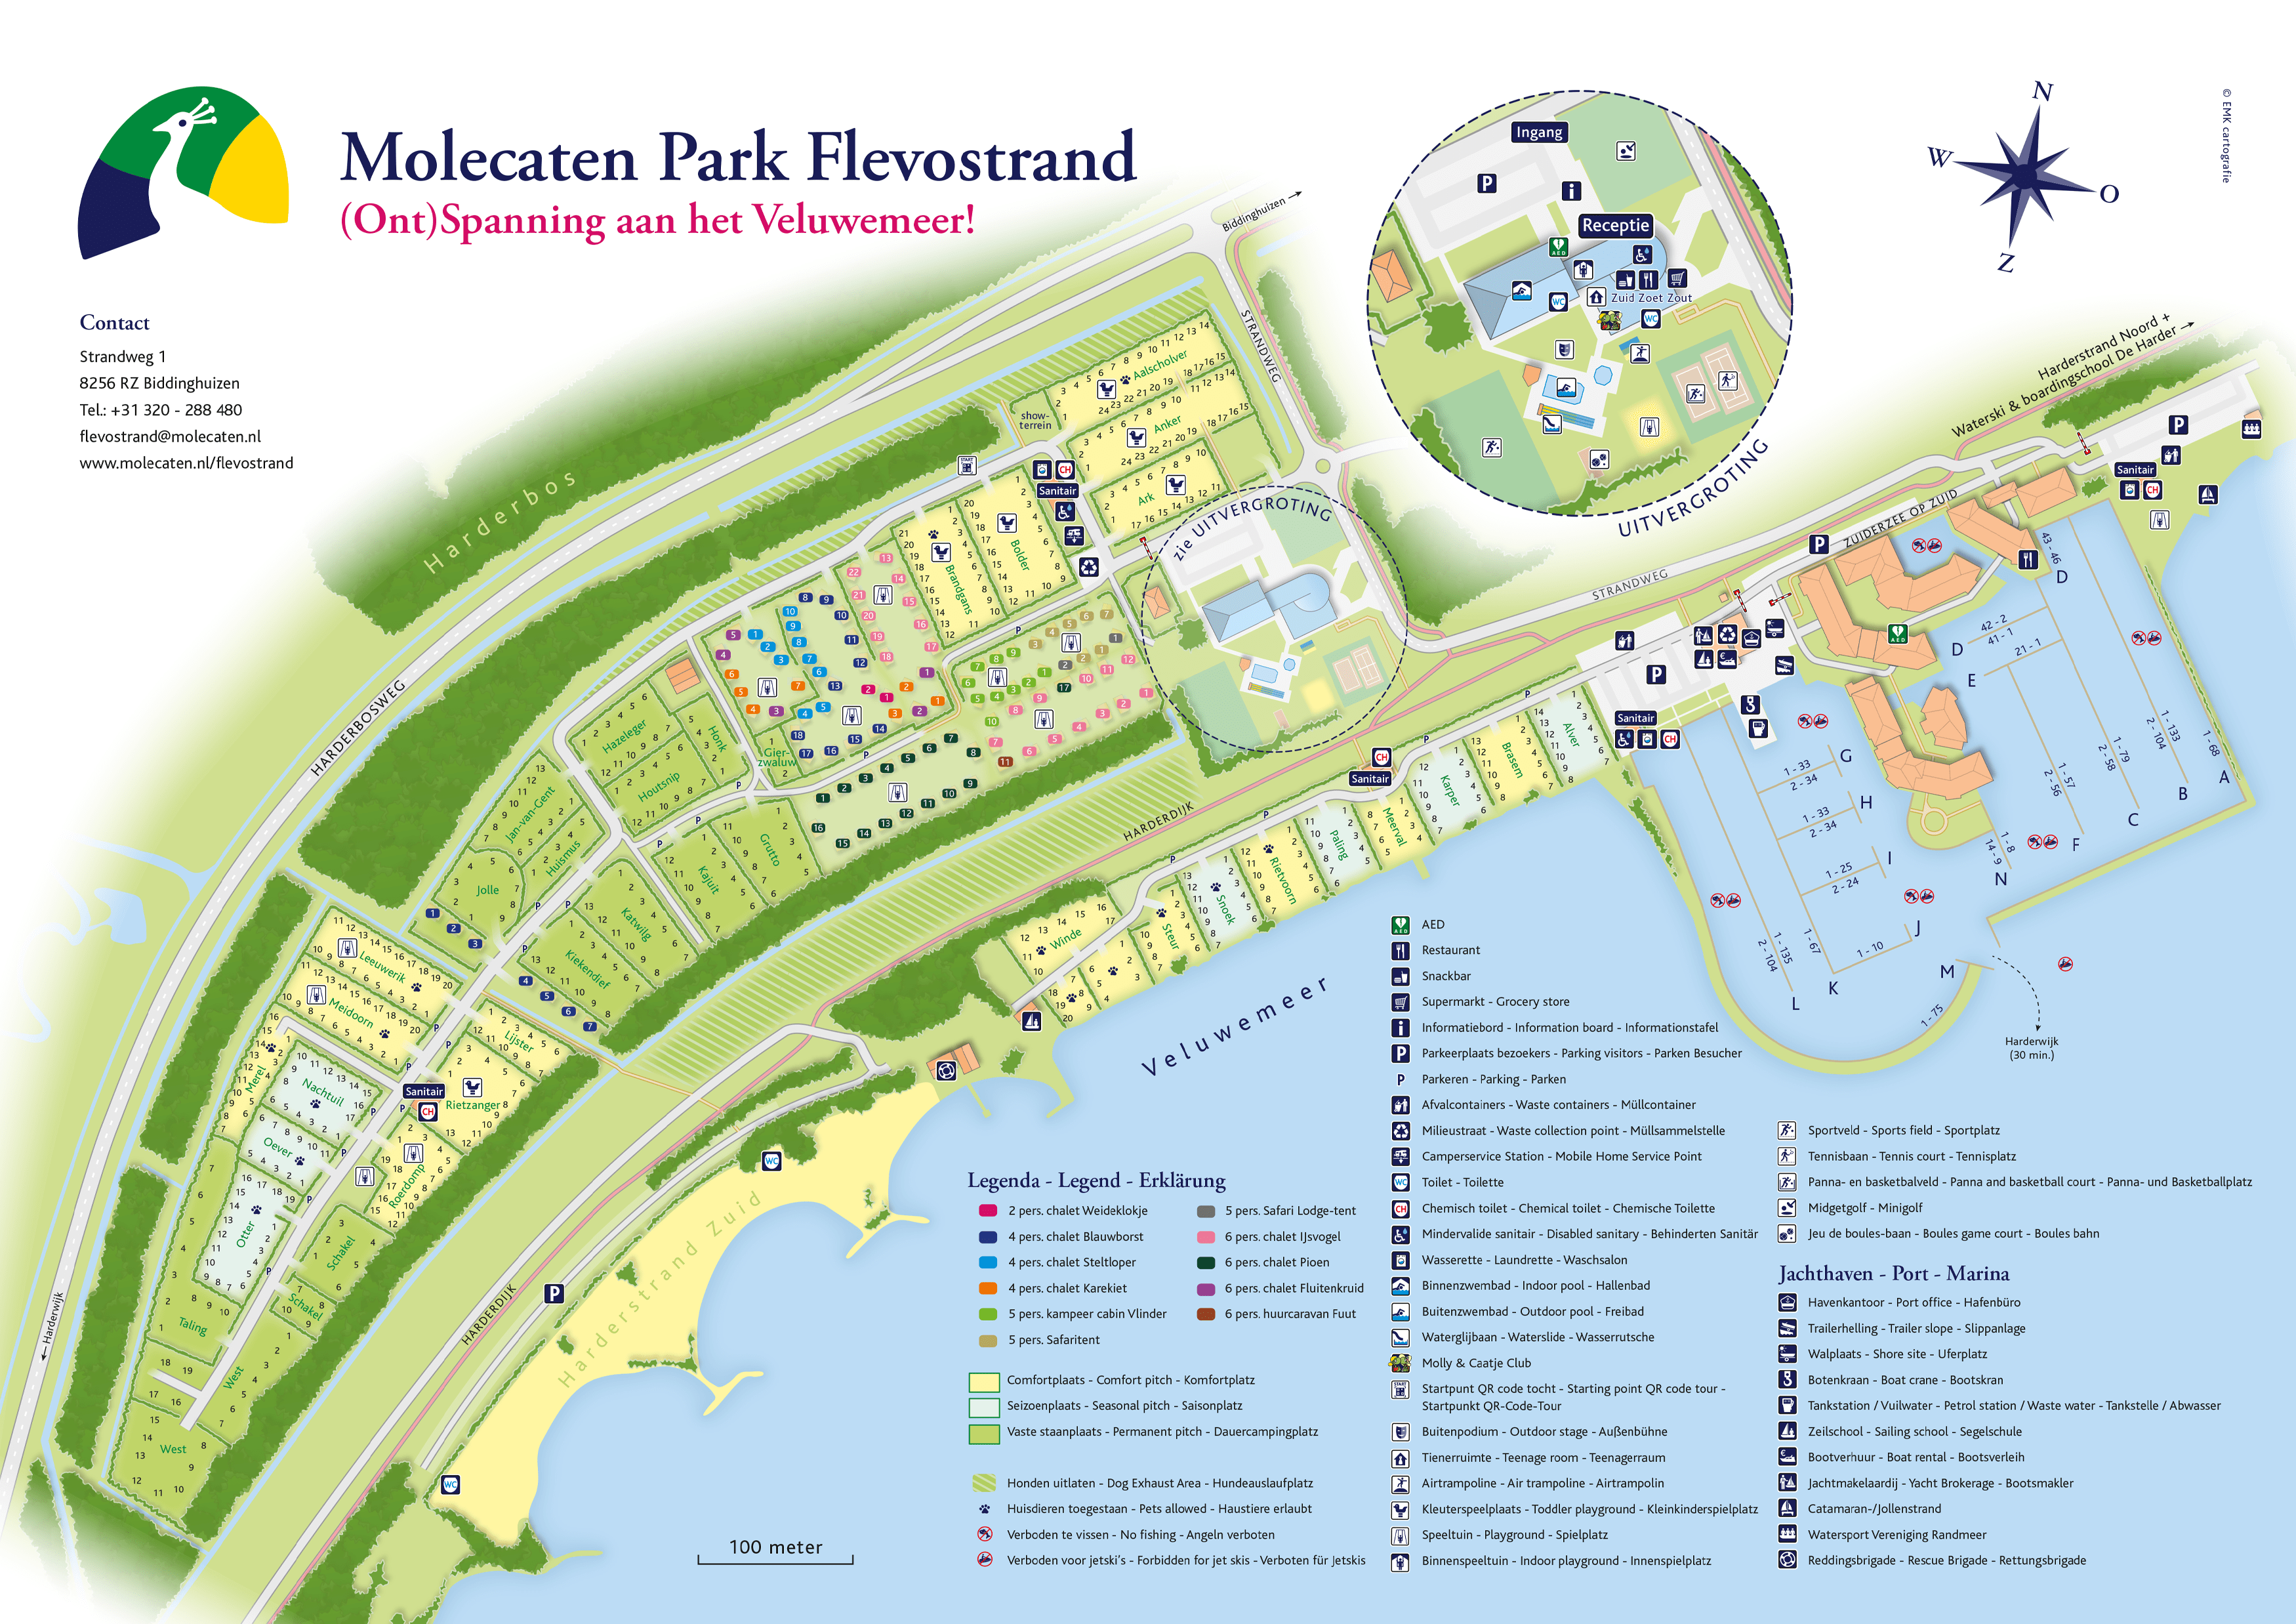 Molecaten Park Flevostrand accommodation.parkmap.alttext